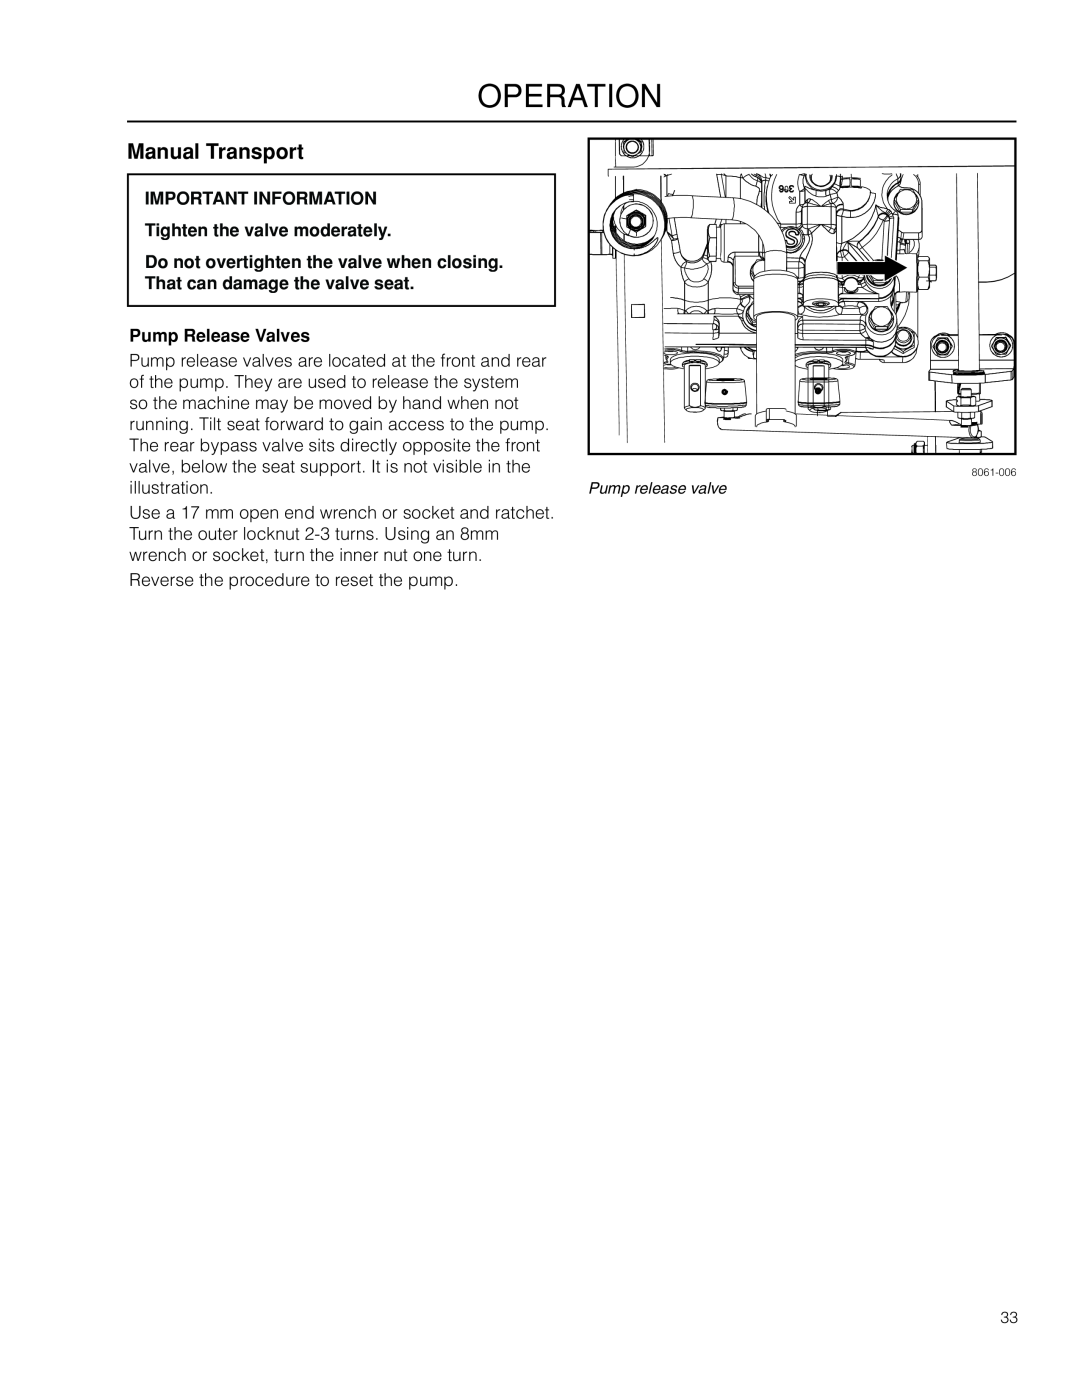 Dixon 966985401 manual Manual Transport, IMPORTANT INFORMATION Tighten the valve moderately, Pump Release Valves, operation 